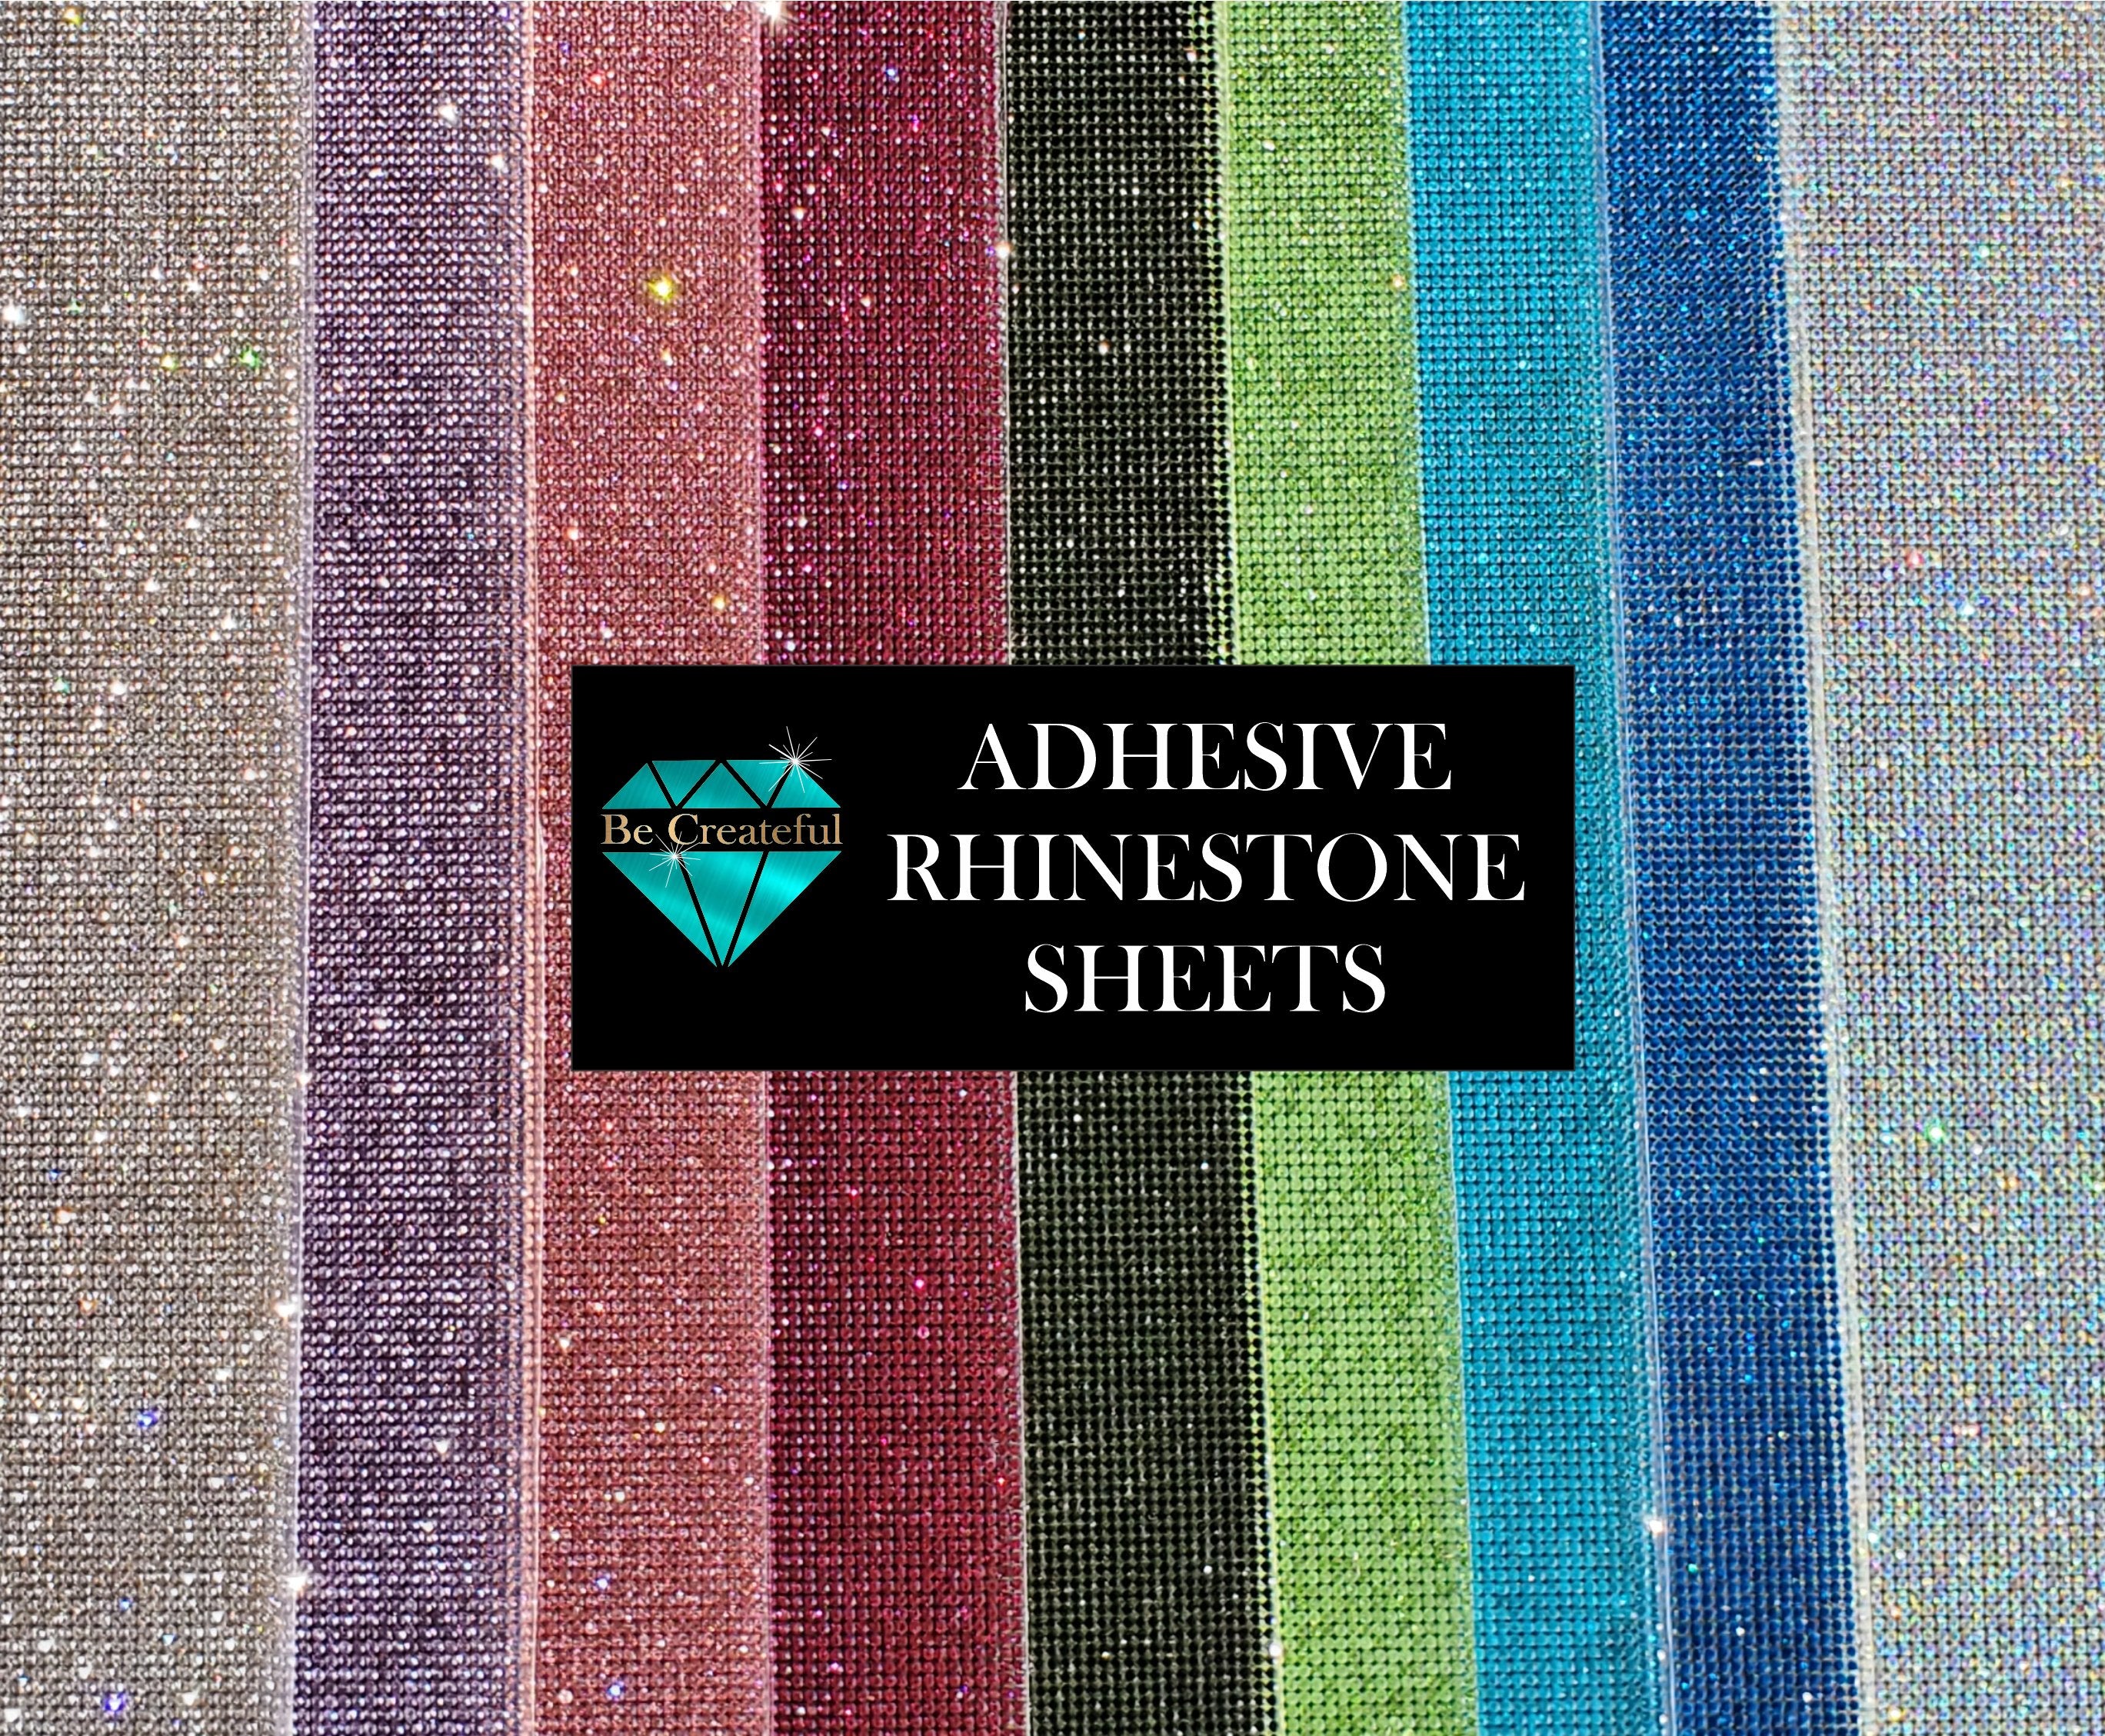 Rhinestone Sheet W Adhesive backed--Deep Purple rhinestone – SnapS Tools